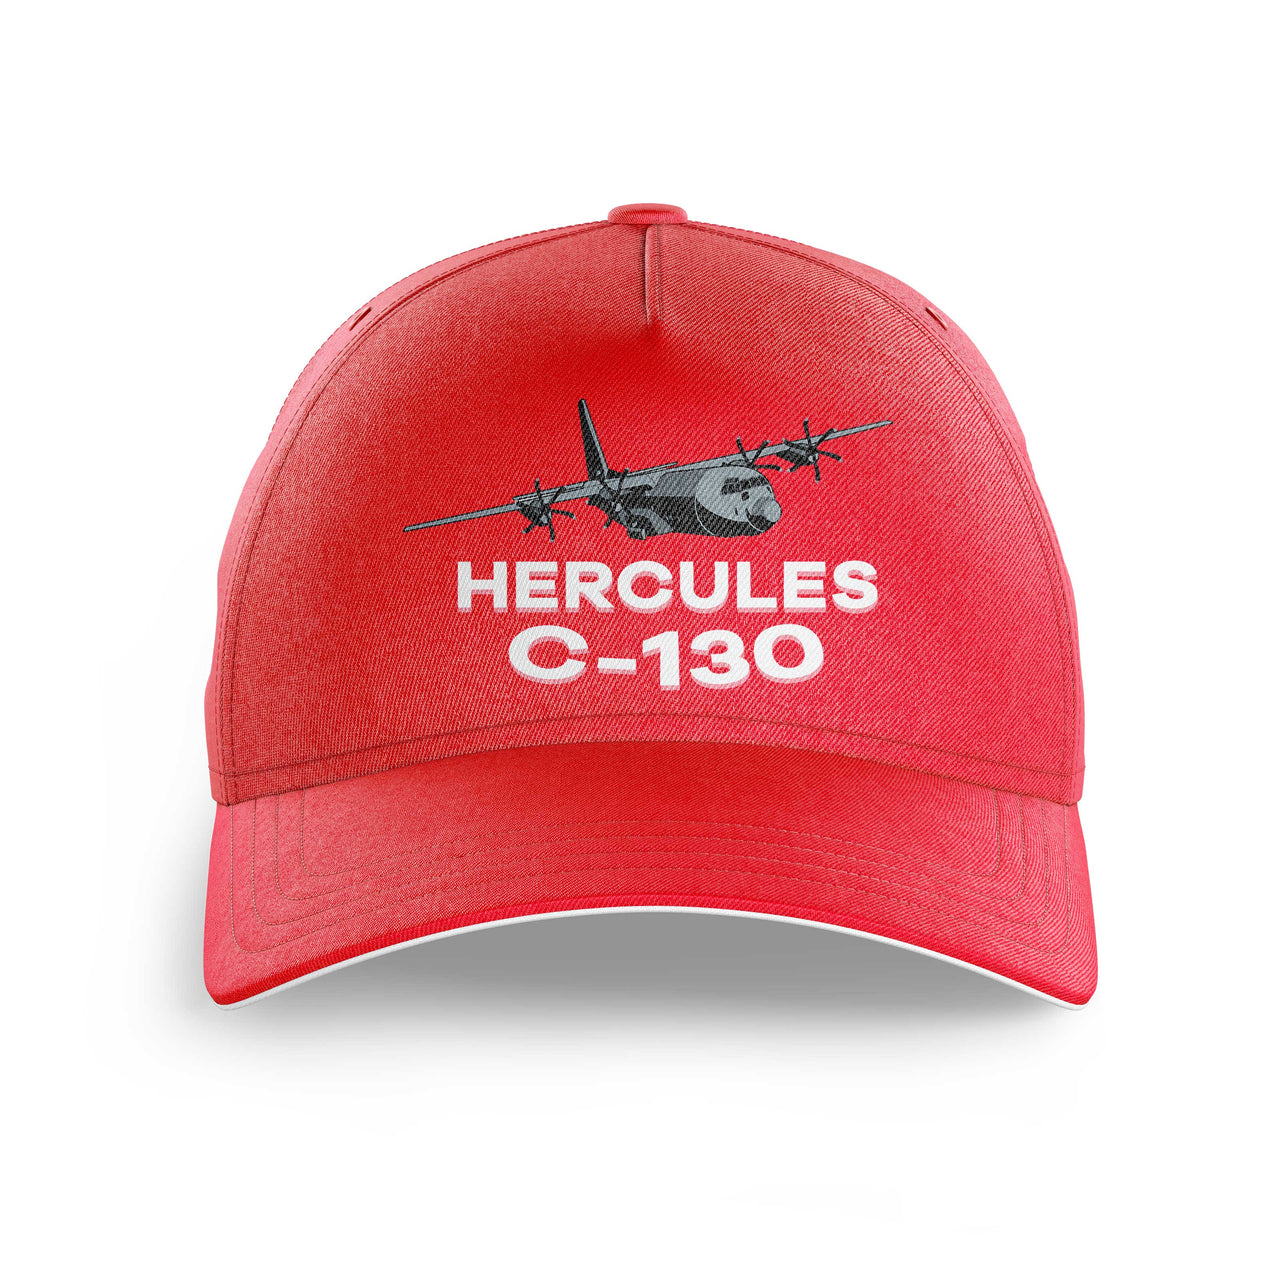 The Hercules C130 Printed Hats